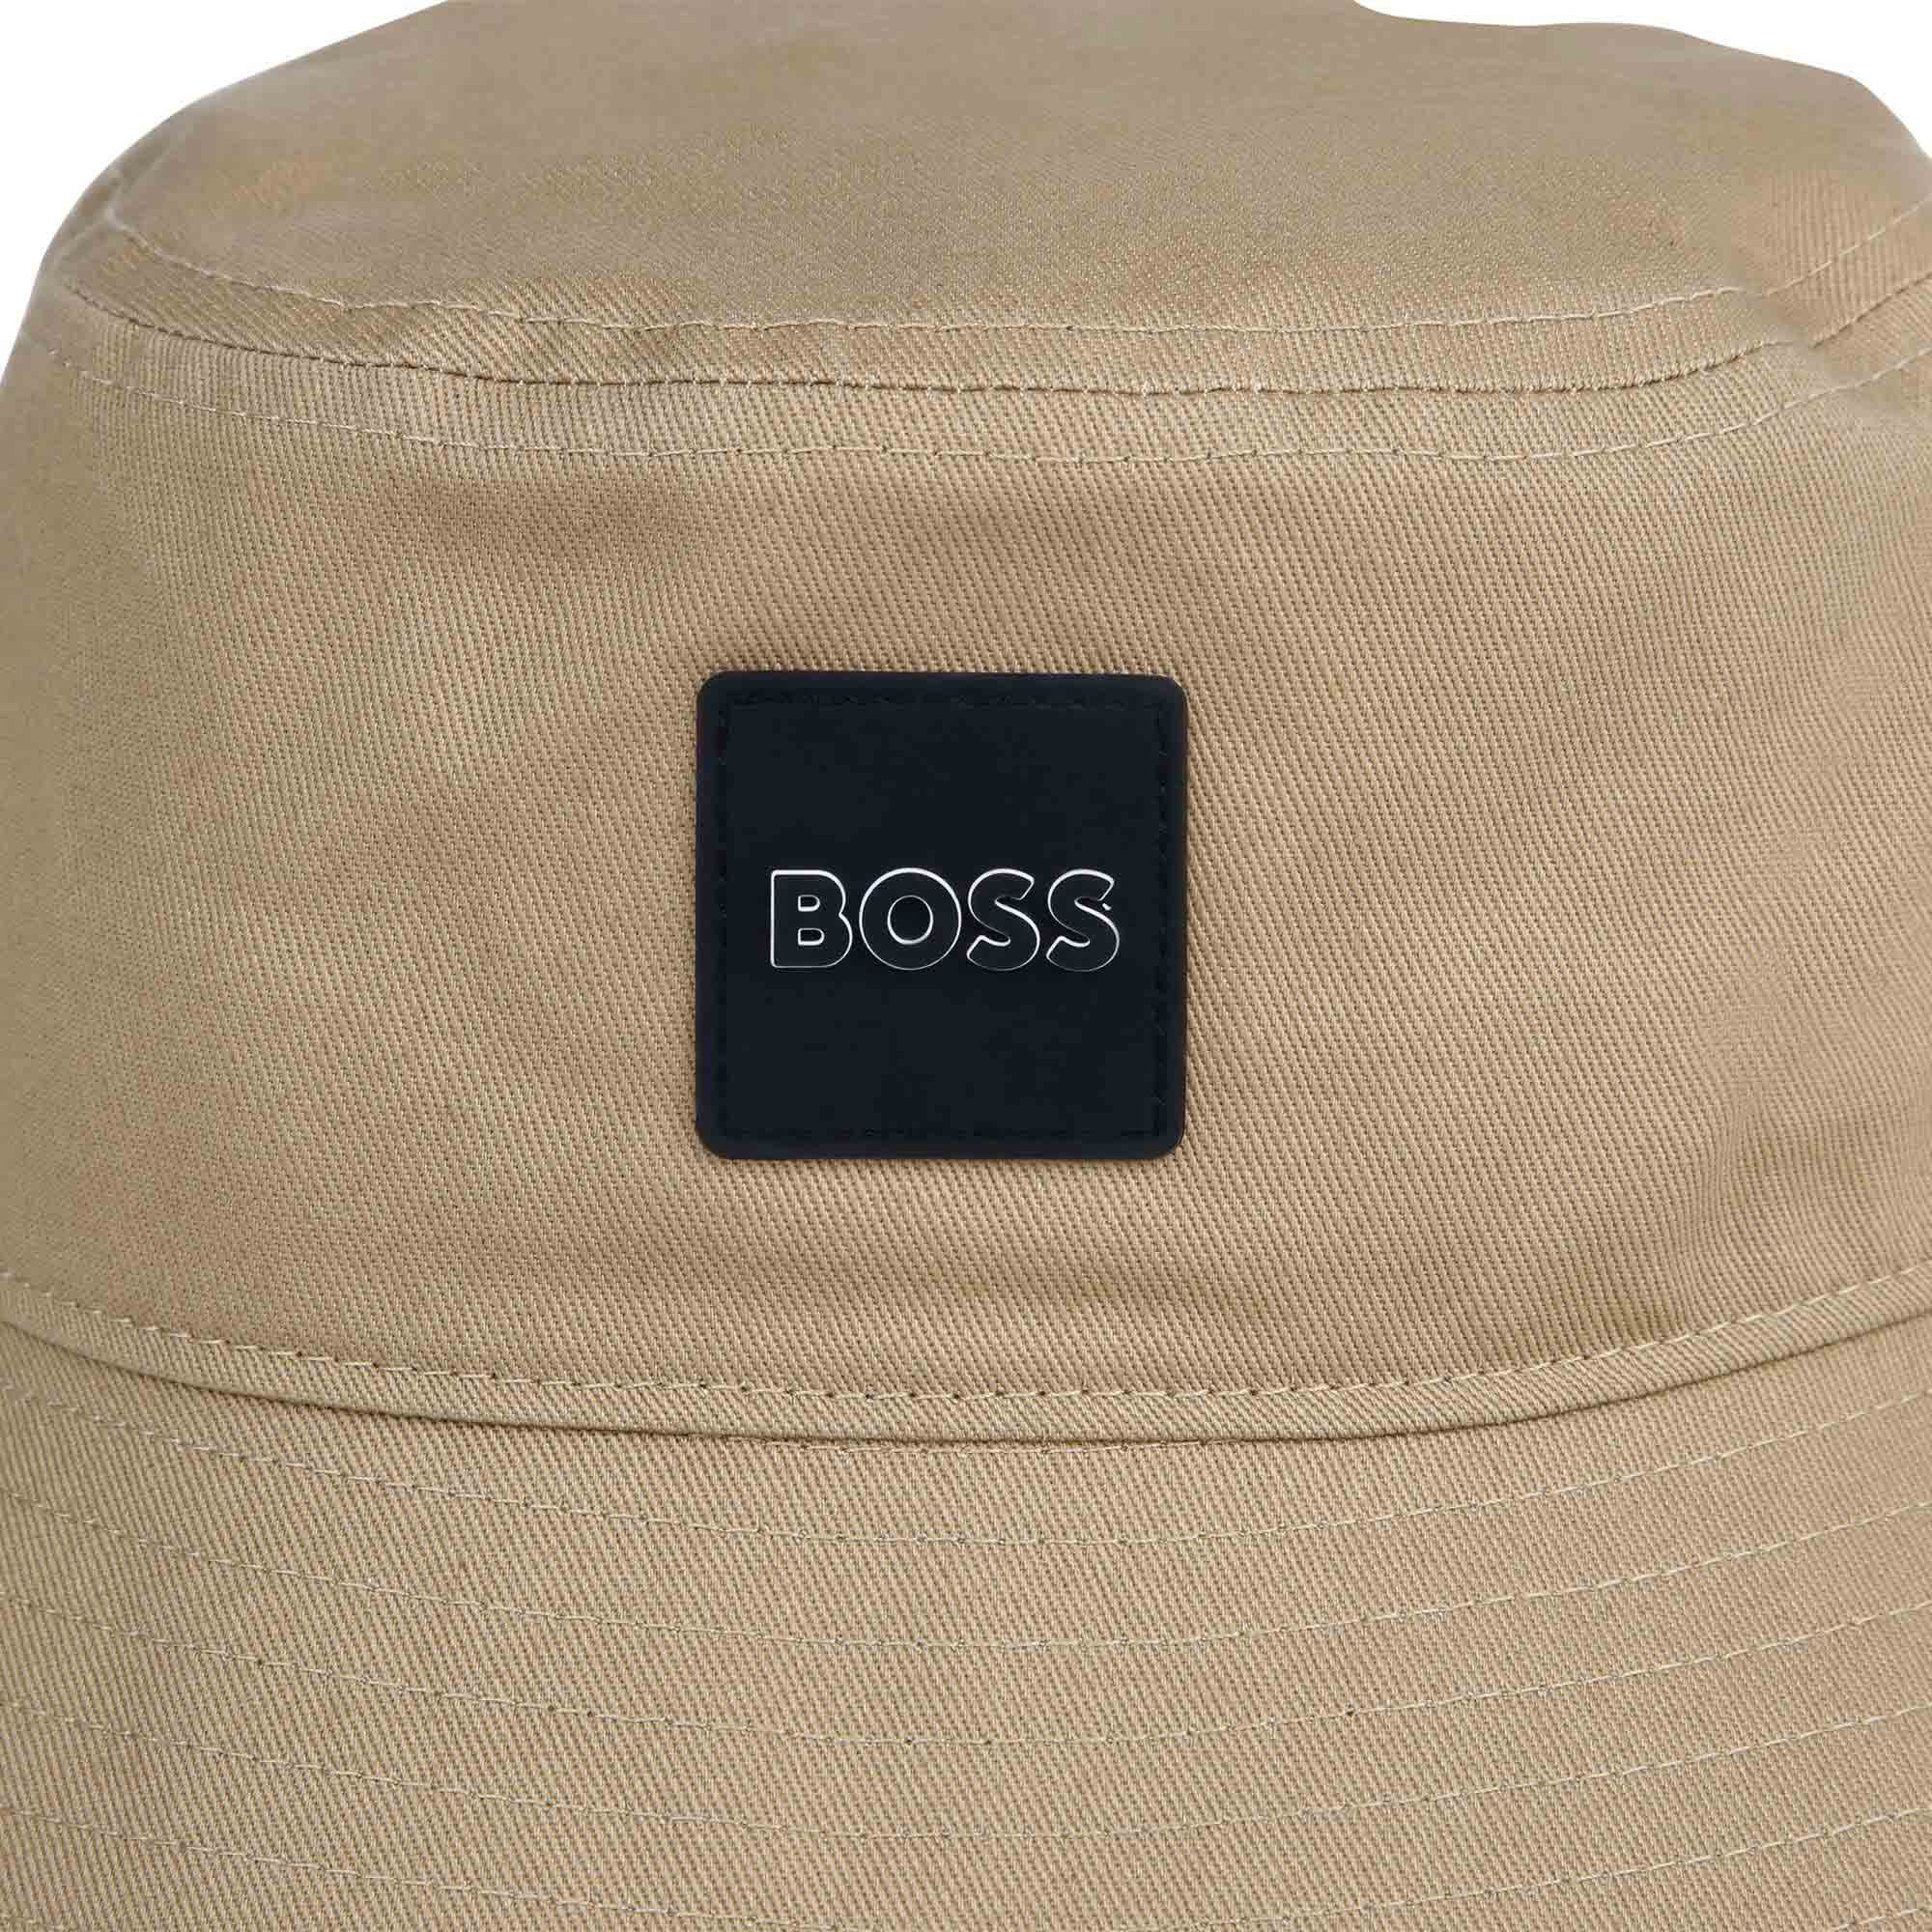 Hugo Boss Stone Bucket Hat